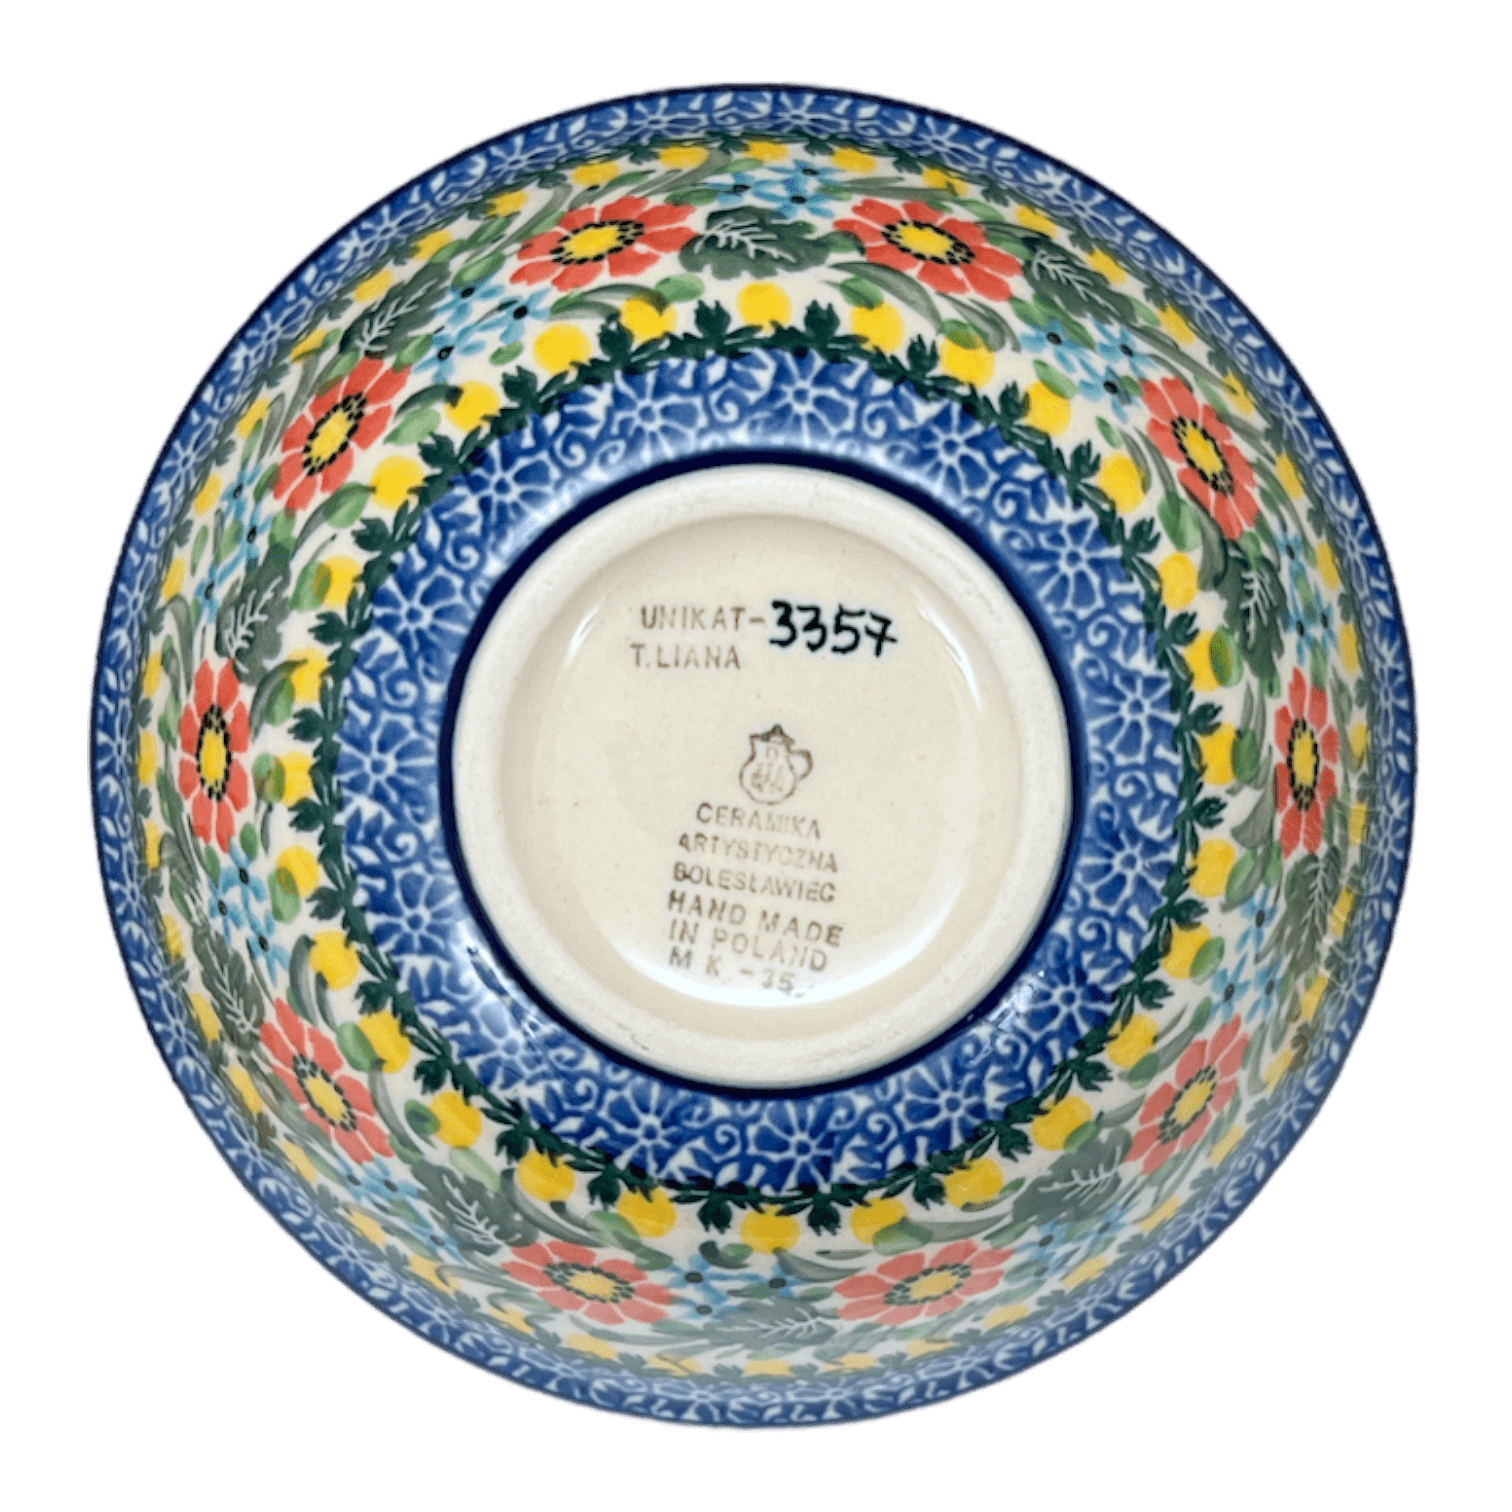 5.5 Kitchen Bowl (Hummingbird Bouquet)